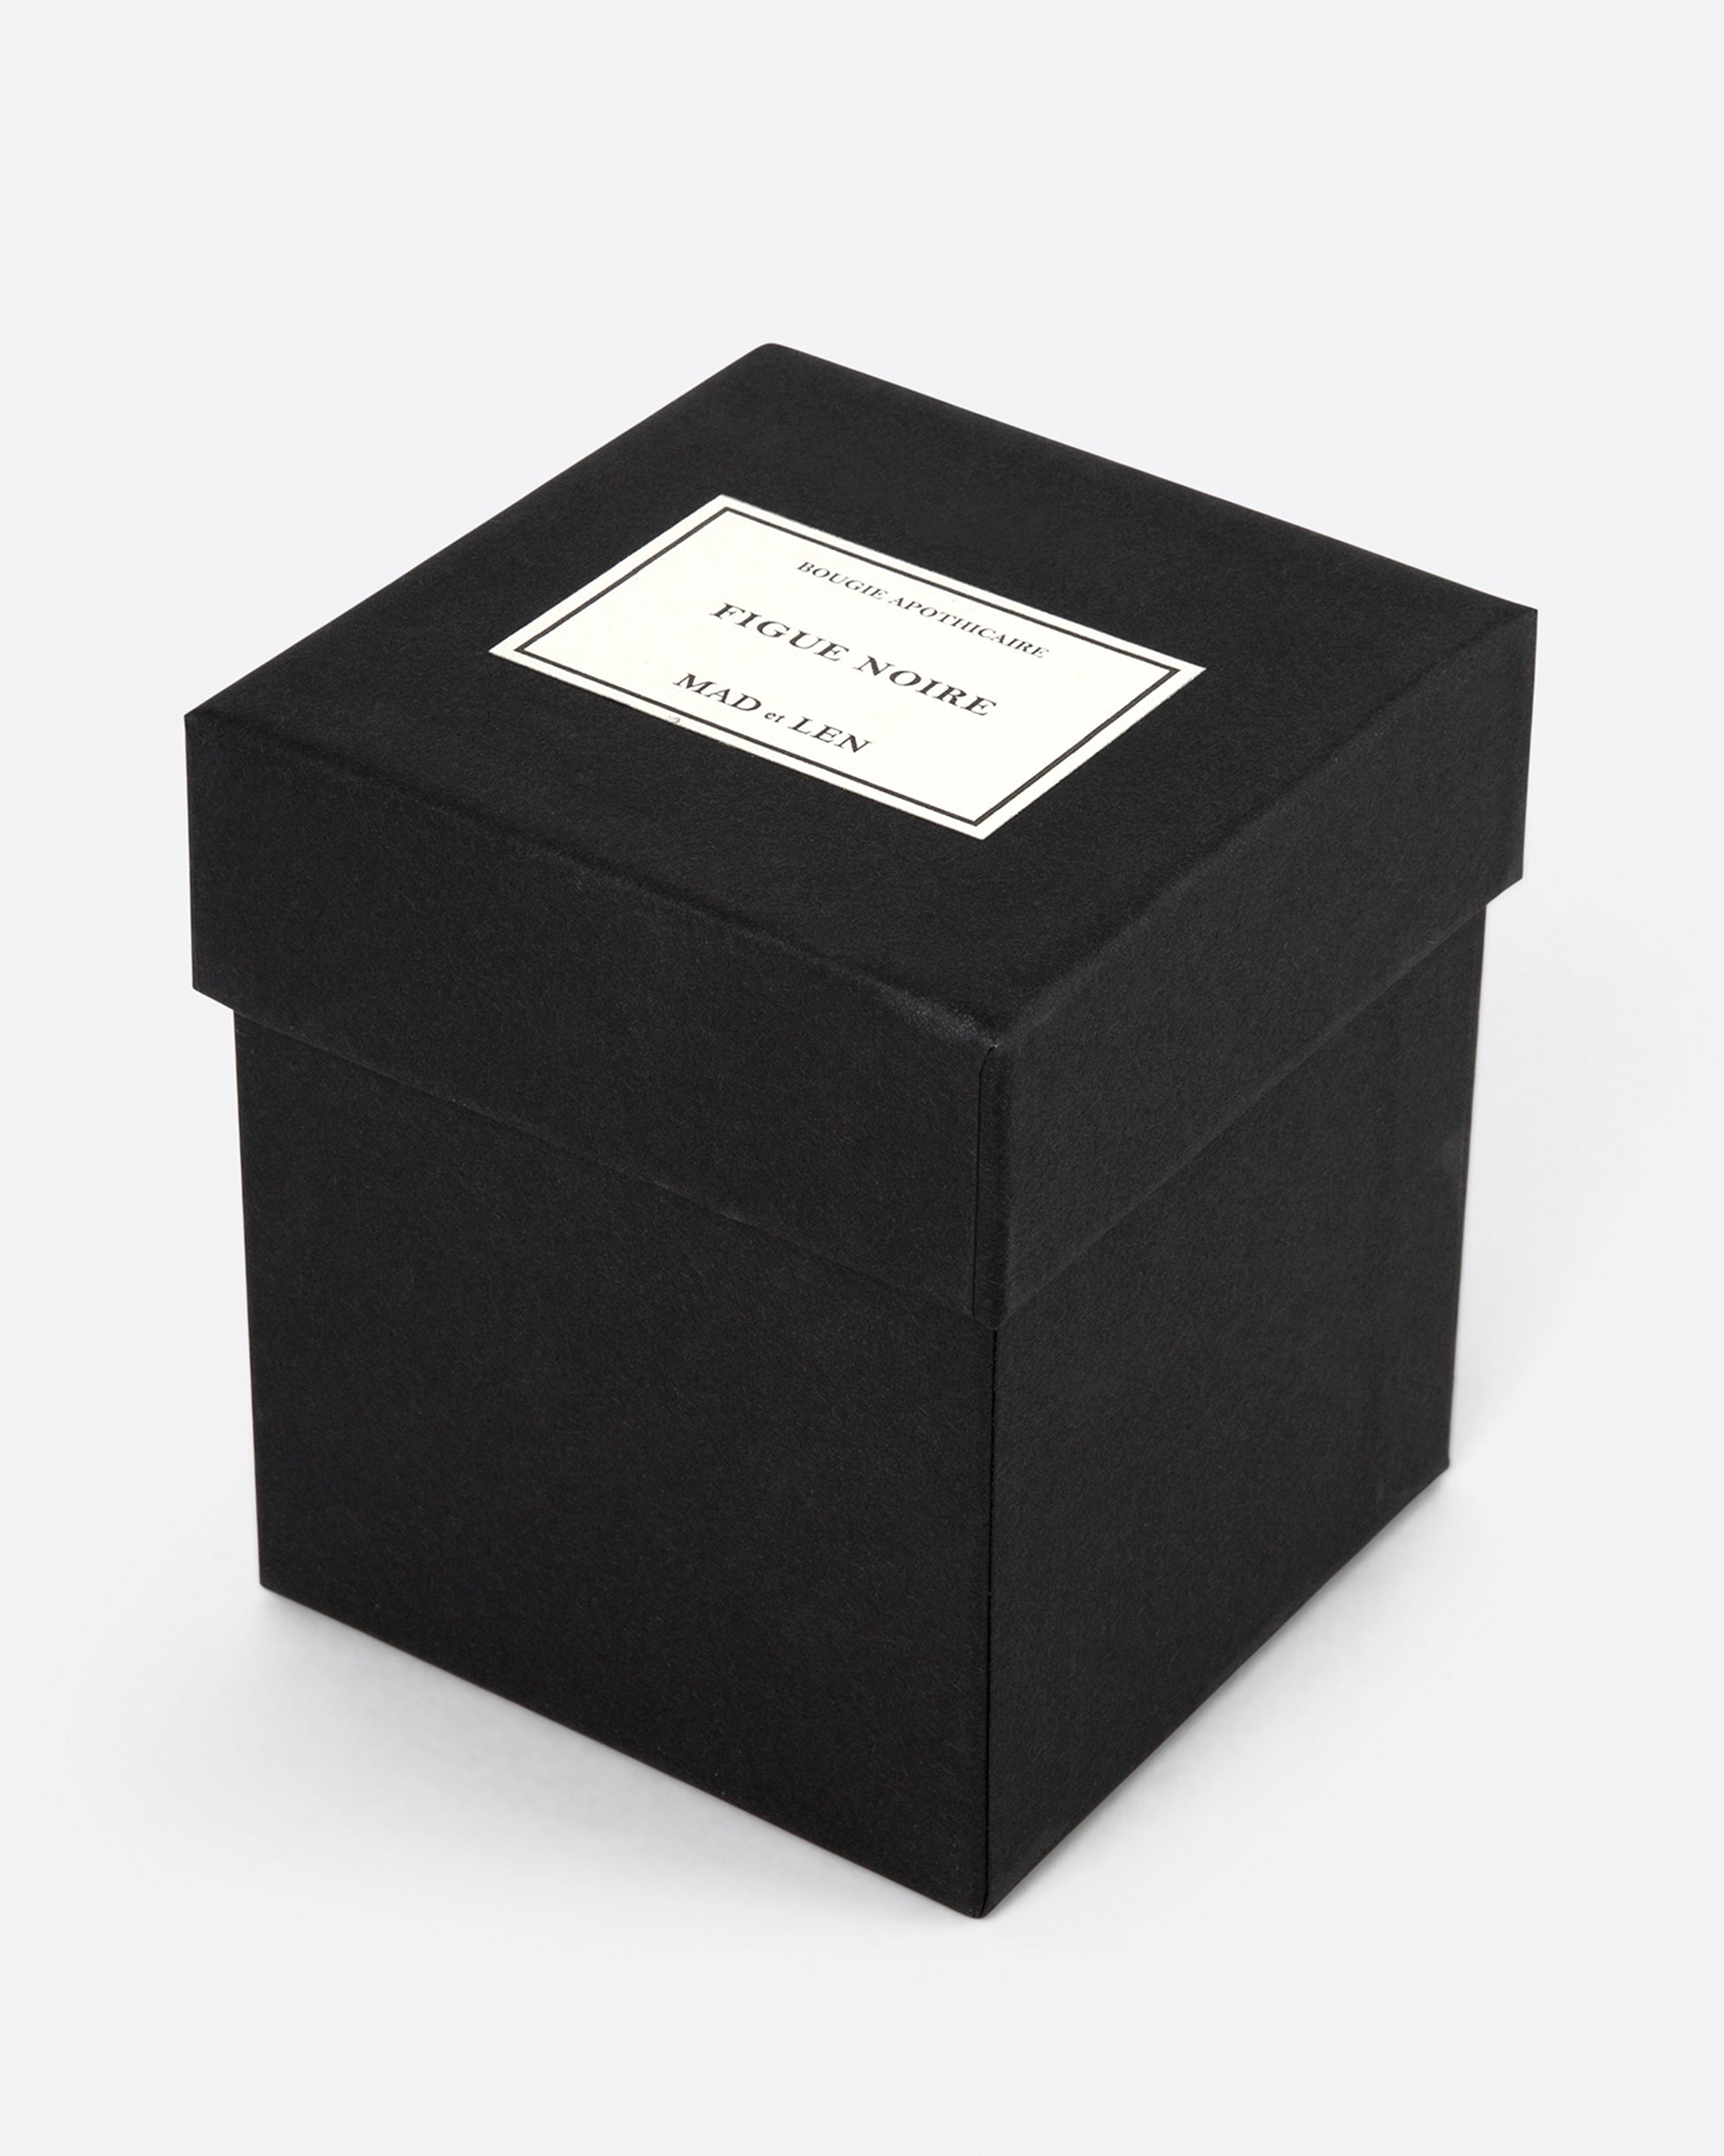 Box for the Mad et Len Figue Noire candle.